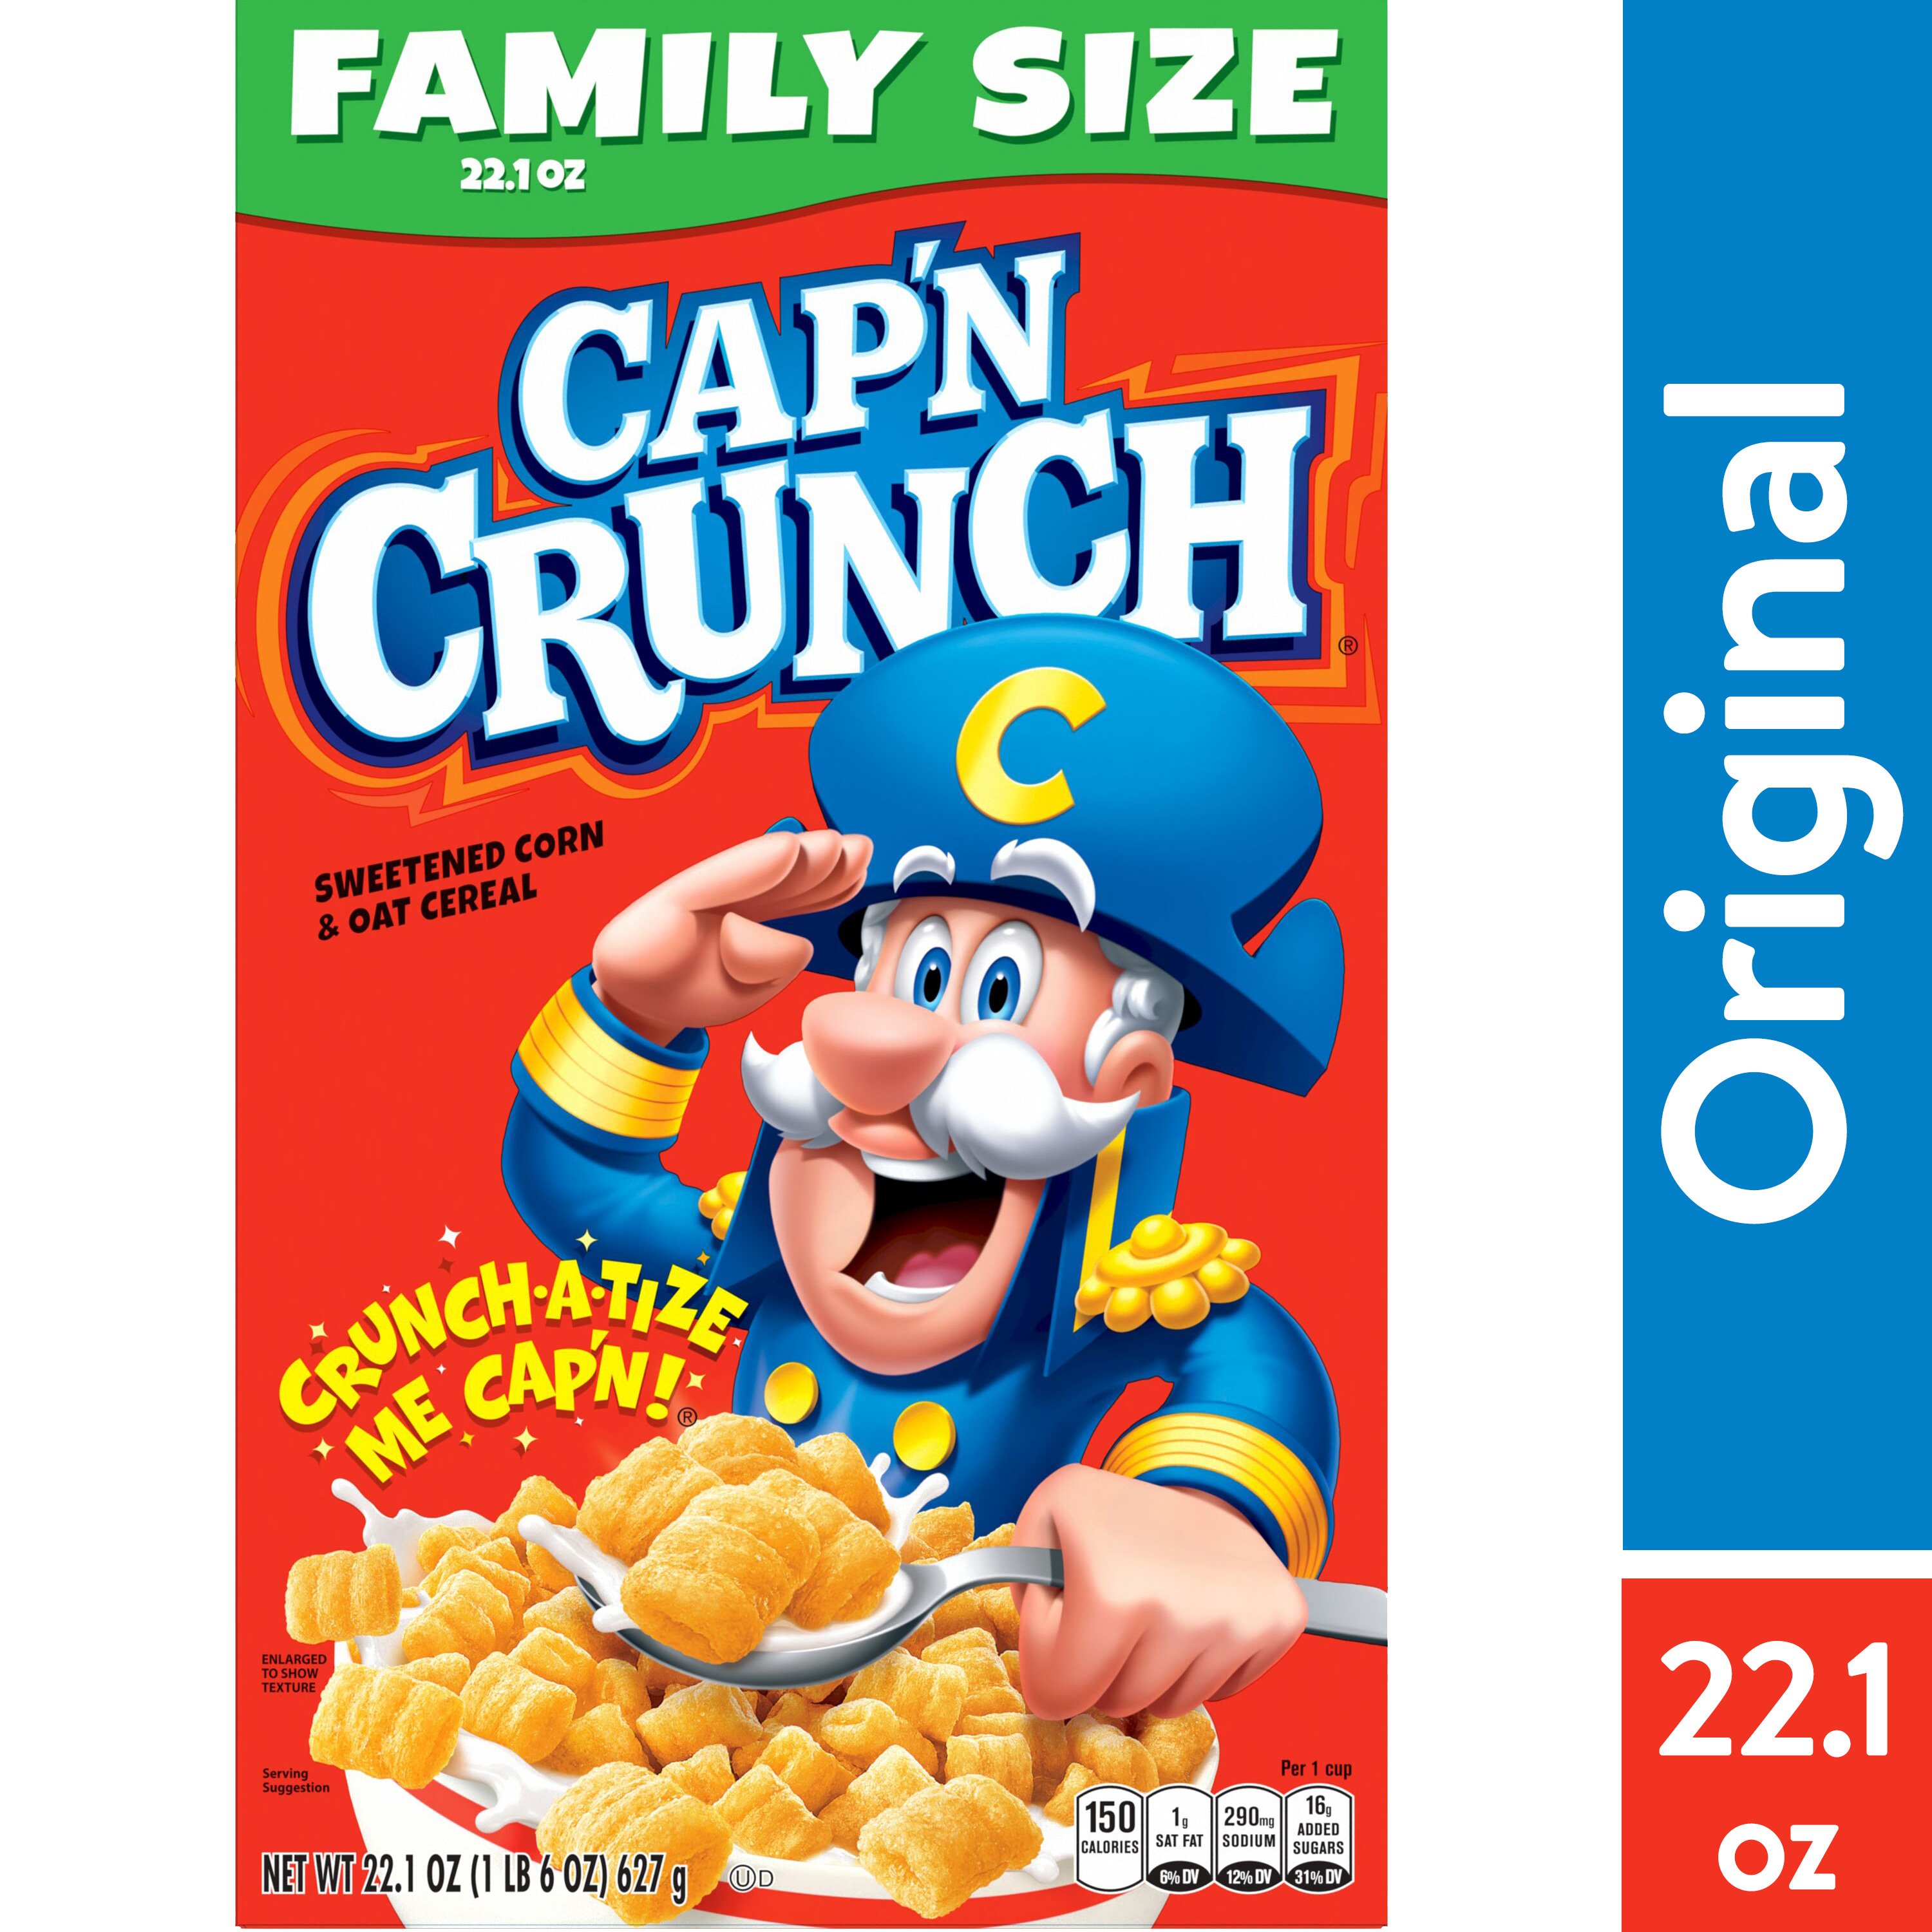 Cap'n Crunch Sweetened Corn & Oat Cereal, 22.1oz, (Single Pack) - image 1 of 10